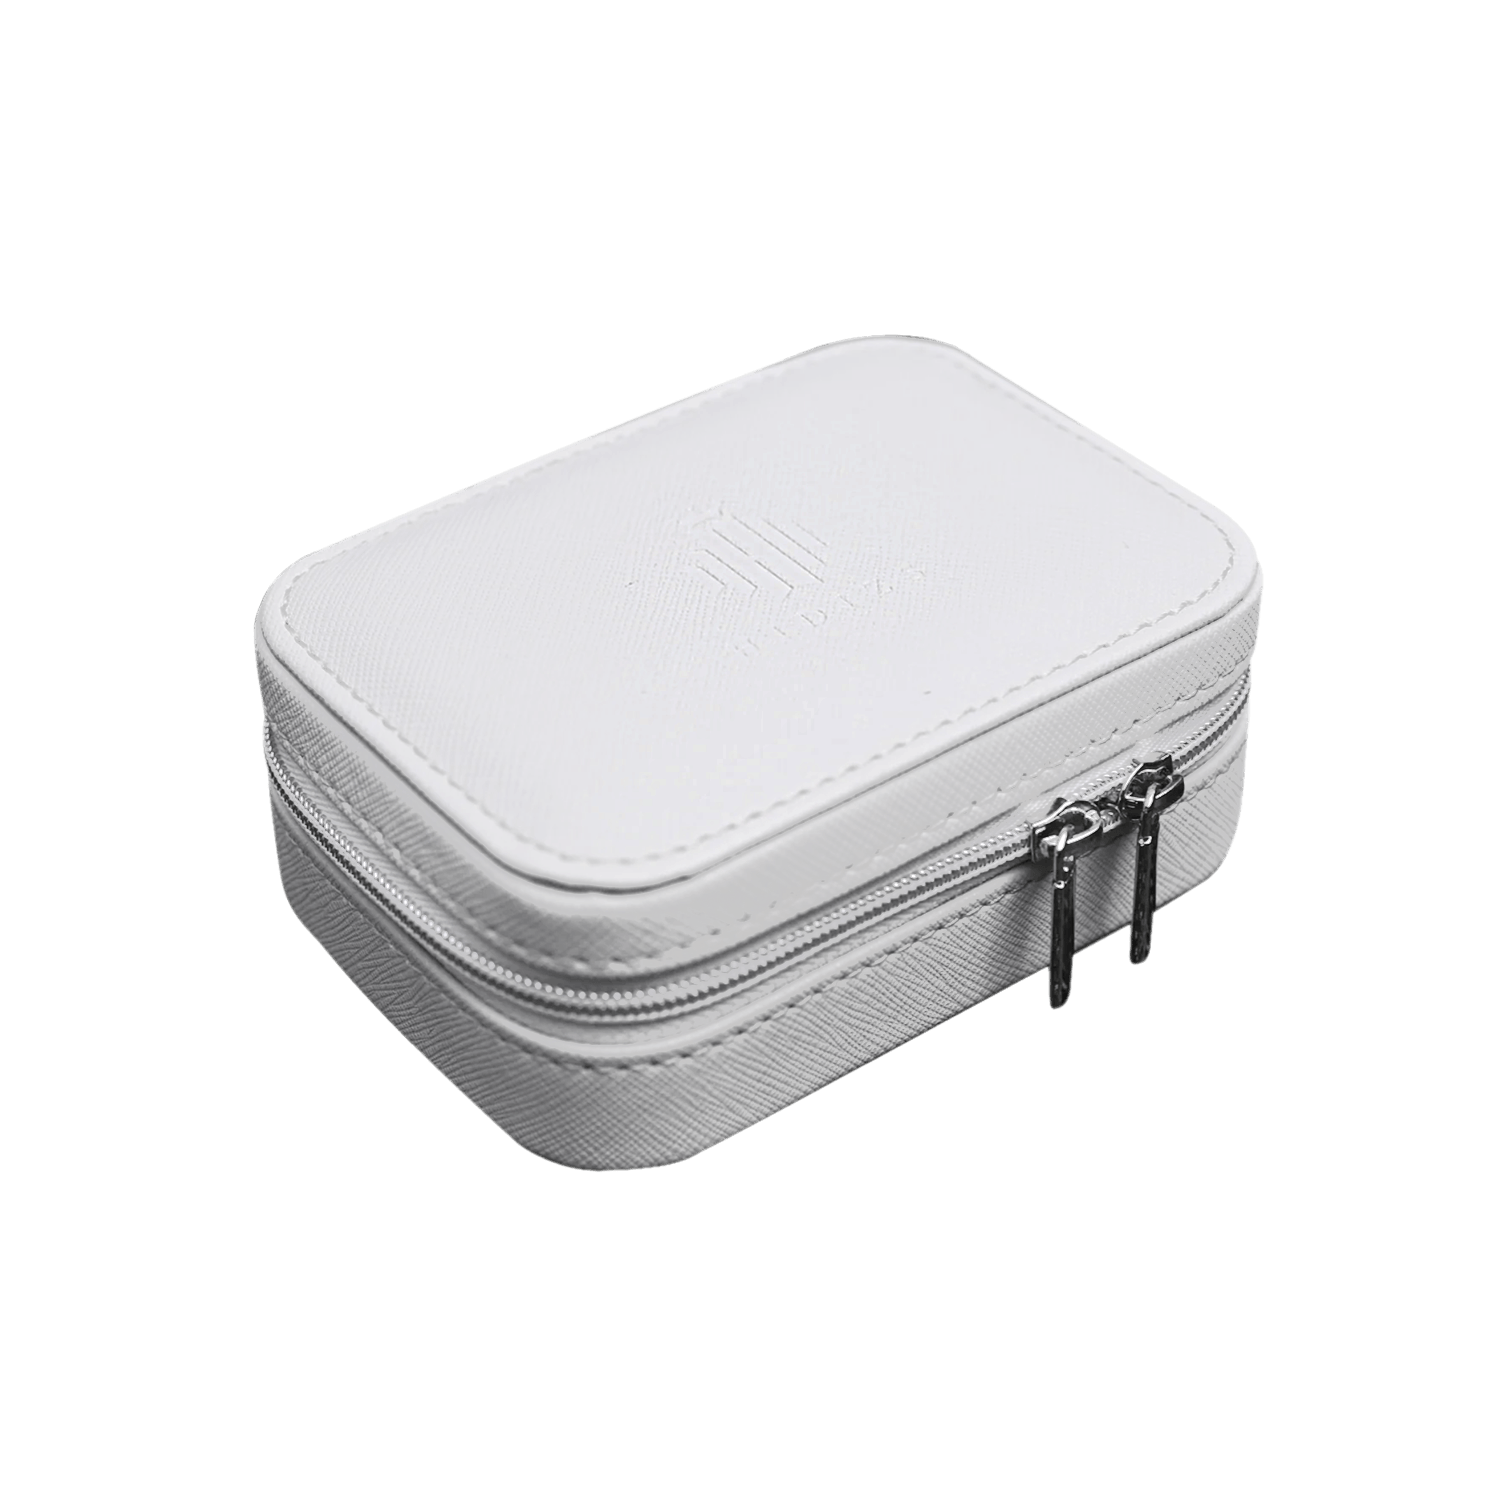 Hidizs EA02 Portable Leather Case Storage Box